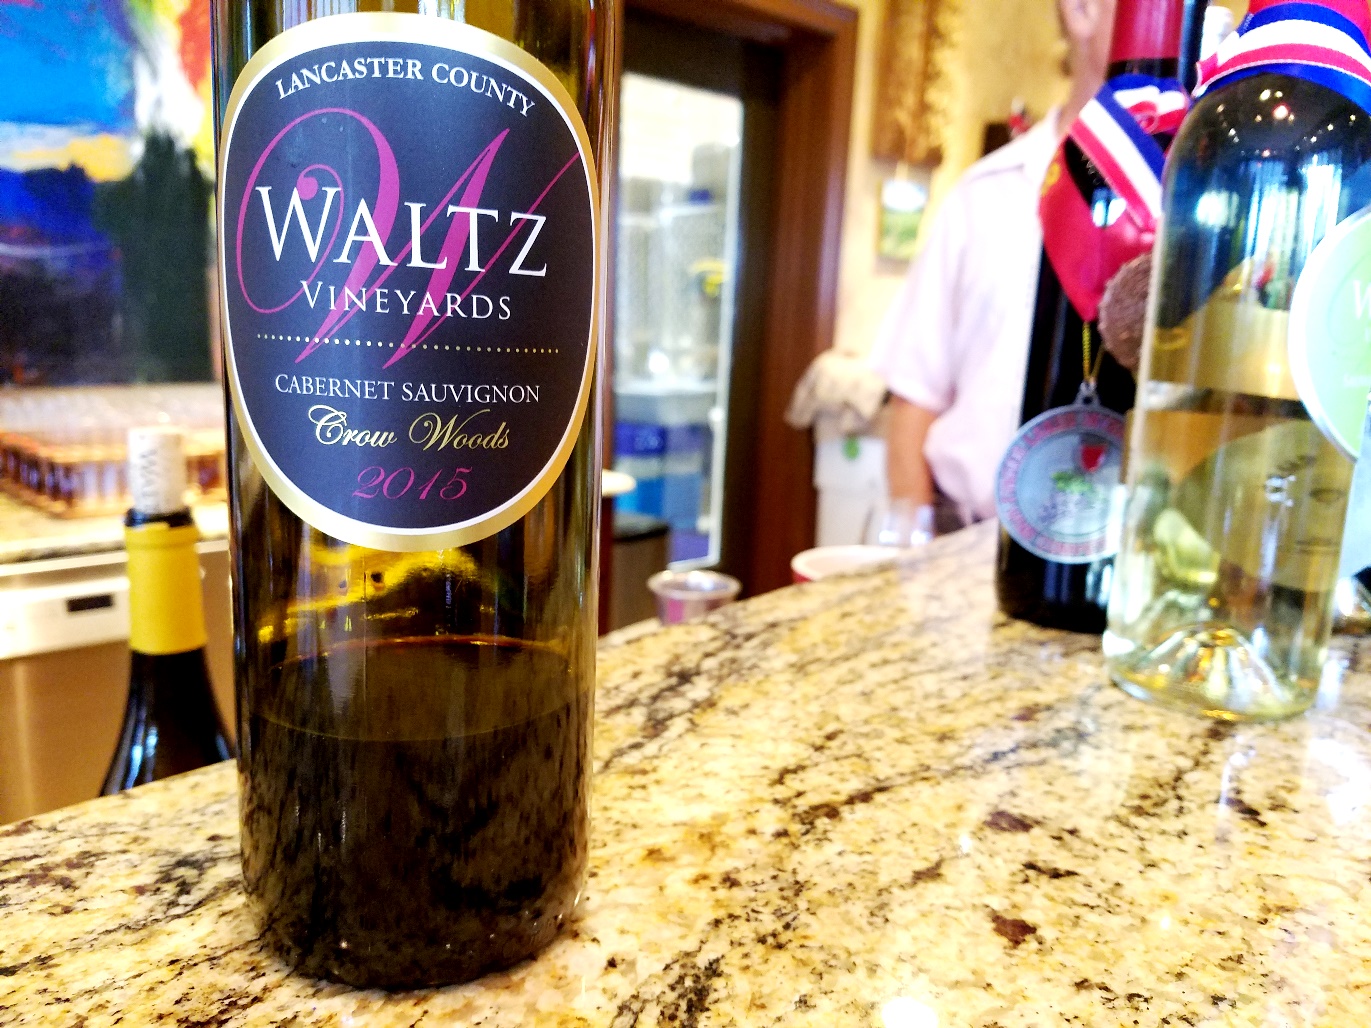 Waltz Vineyards, Cabernet Sauvignon 2015, Crow Woods, Lancaster, Pennsylvania, Wine Casual